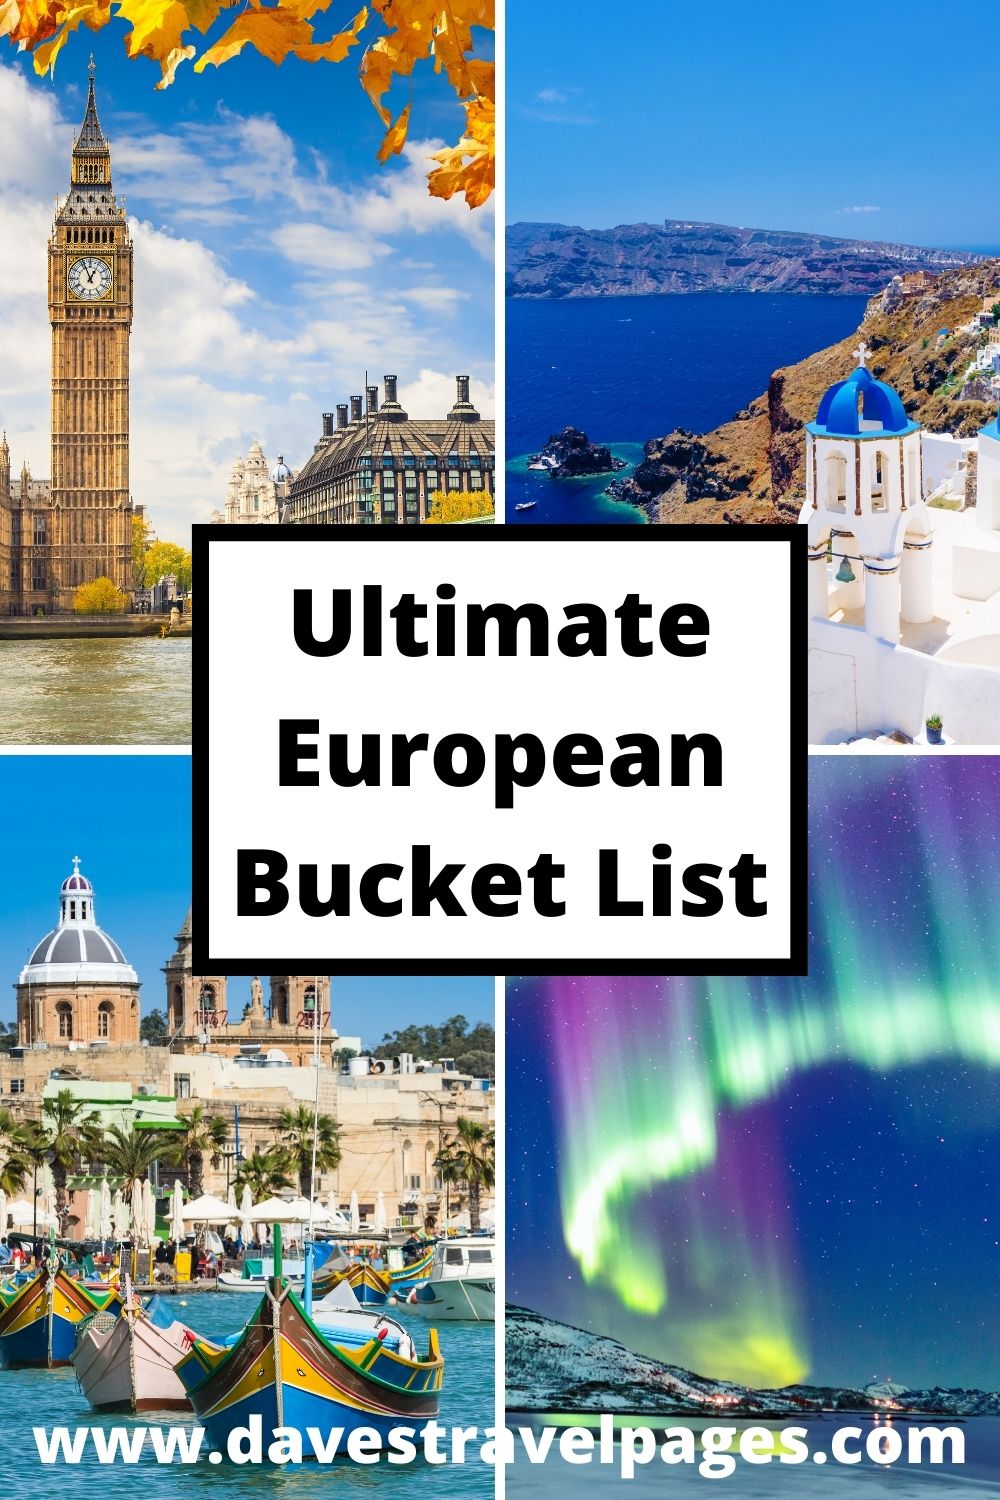 The Ultimate European Bucket List